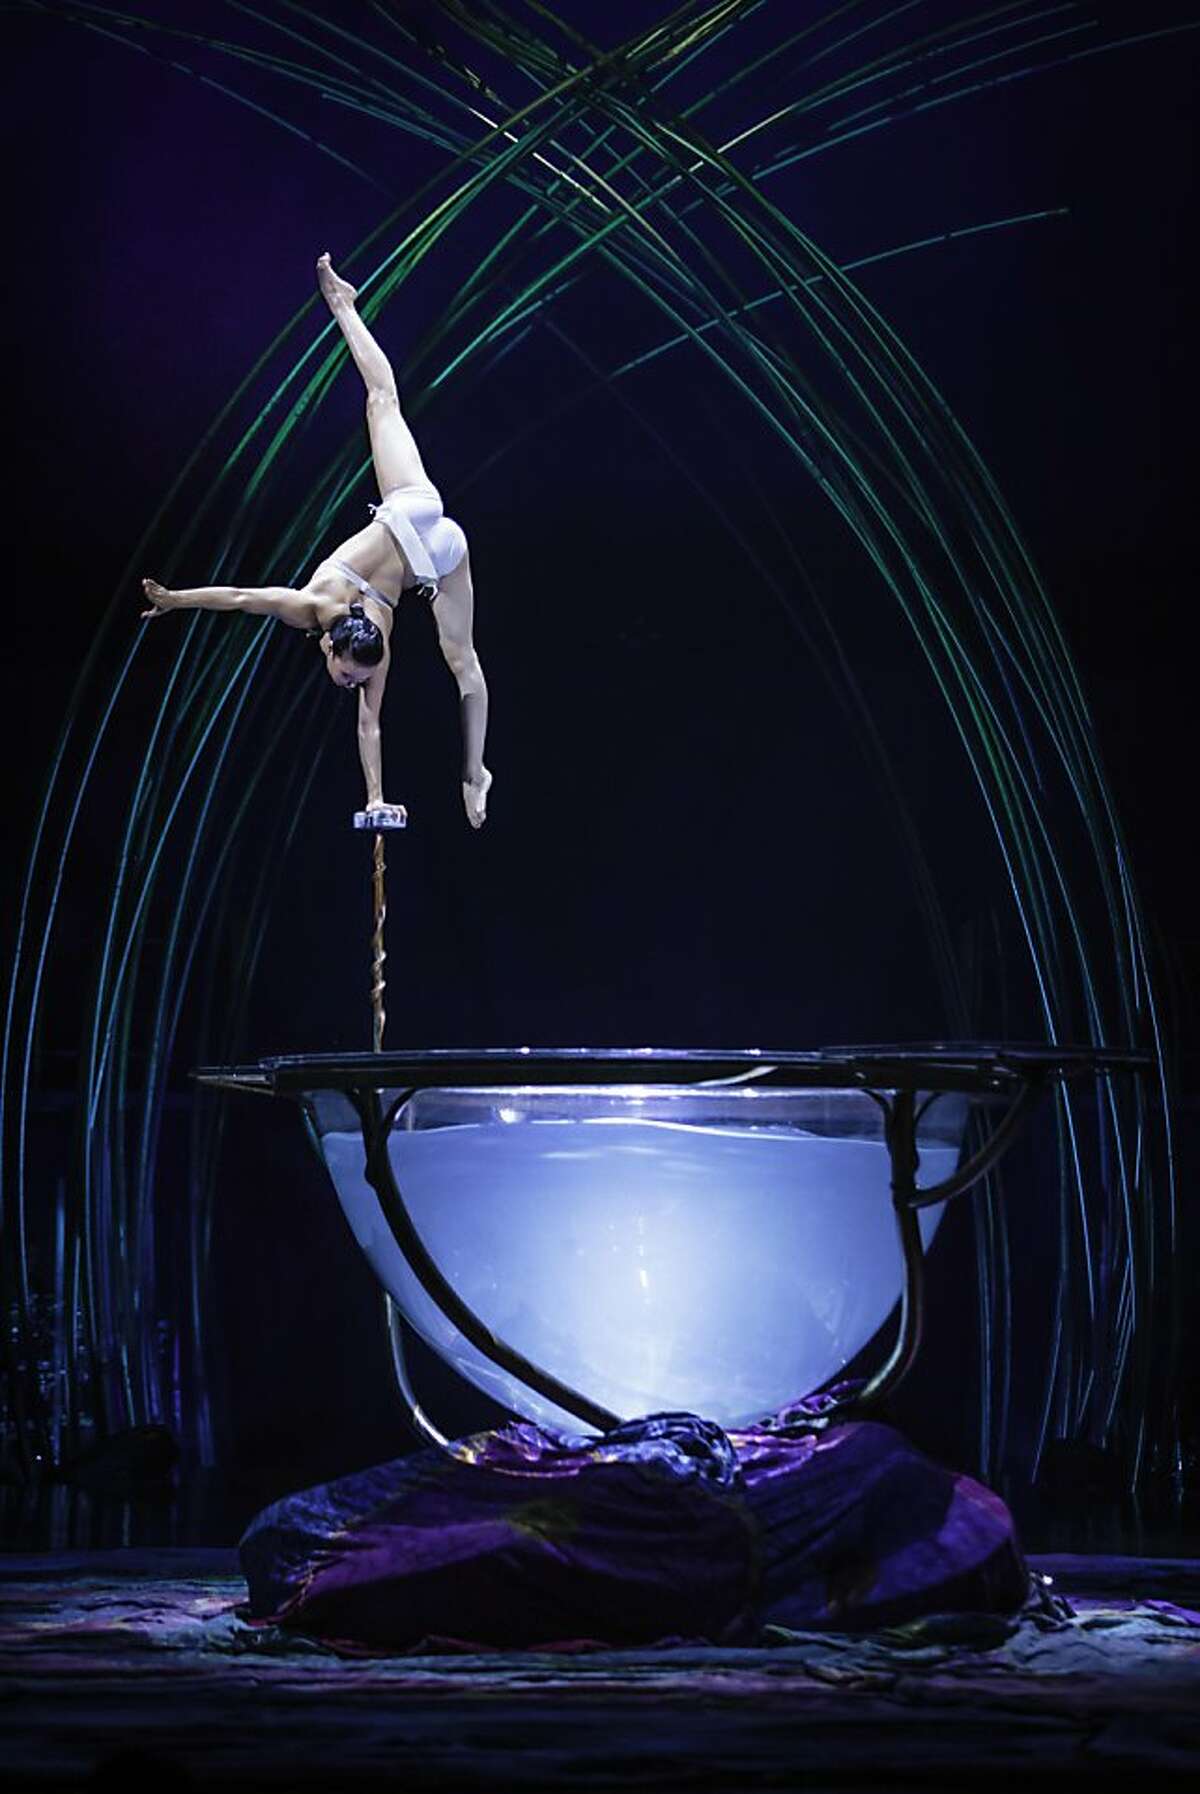 Miranda (Iuliia Mykhailova) discovers herself in her reflection in a challenging hand-balancing routine in Cirque du Soleil's "Amaluna"